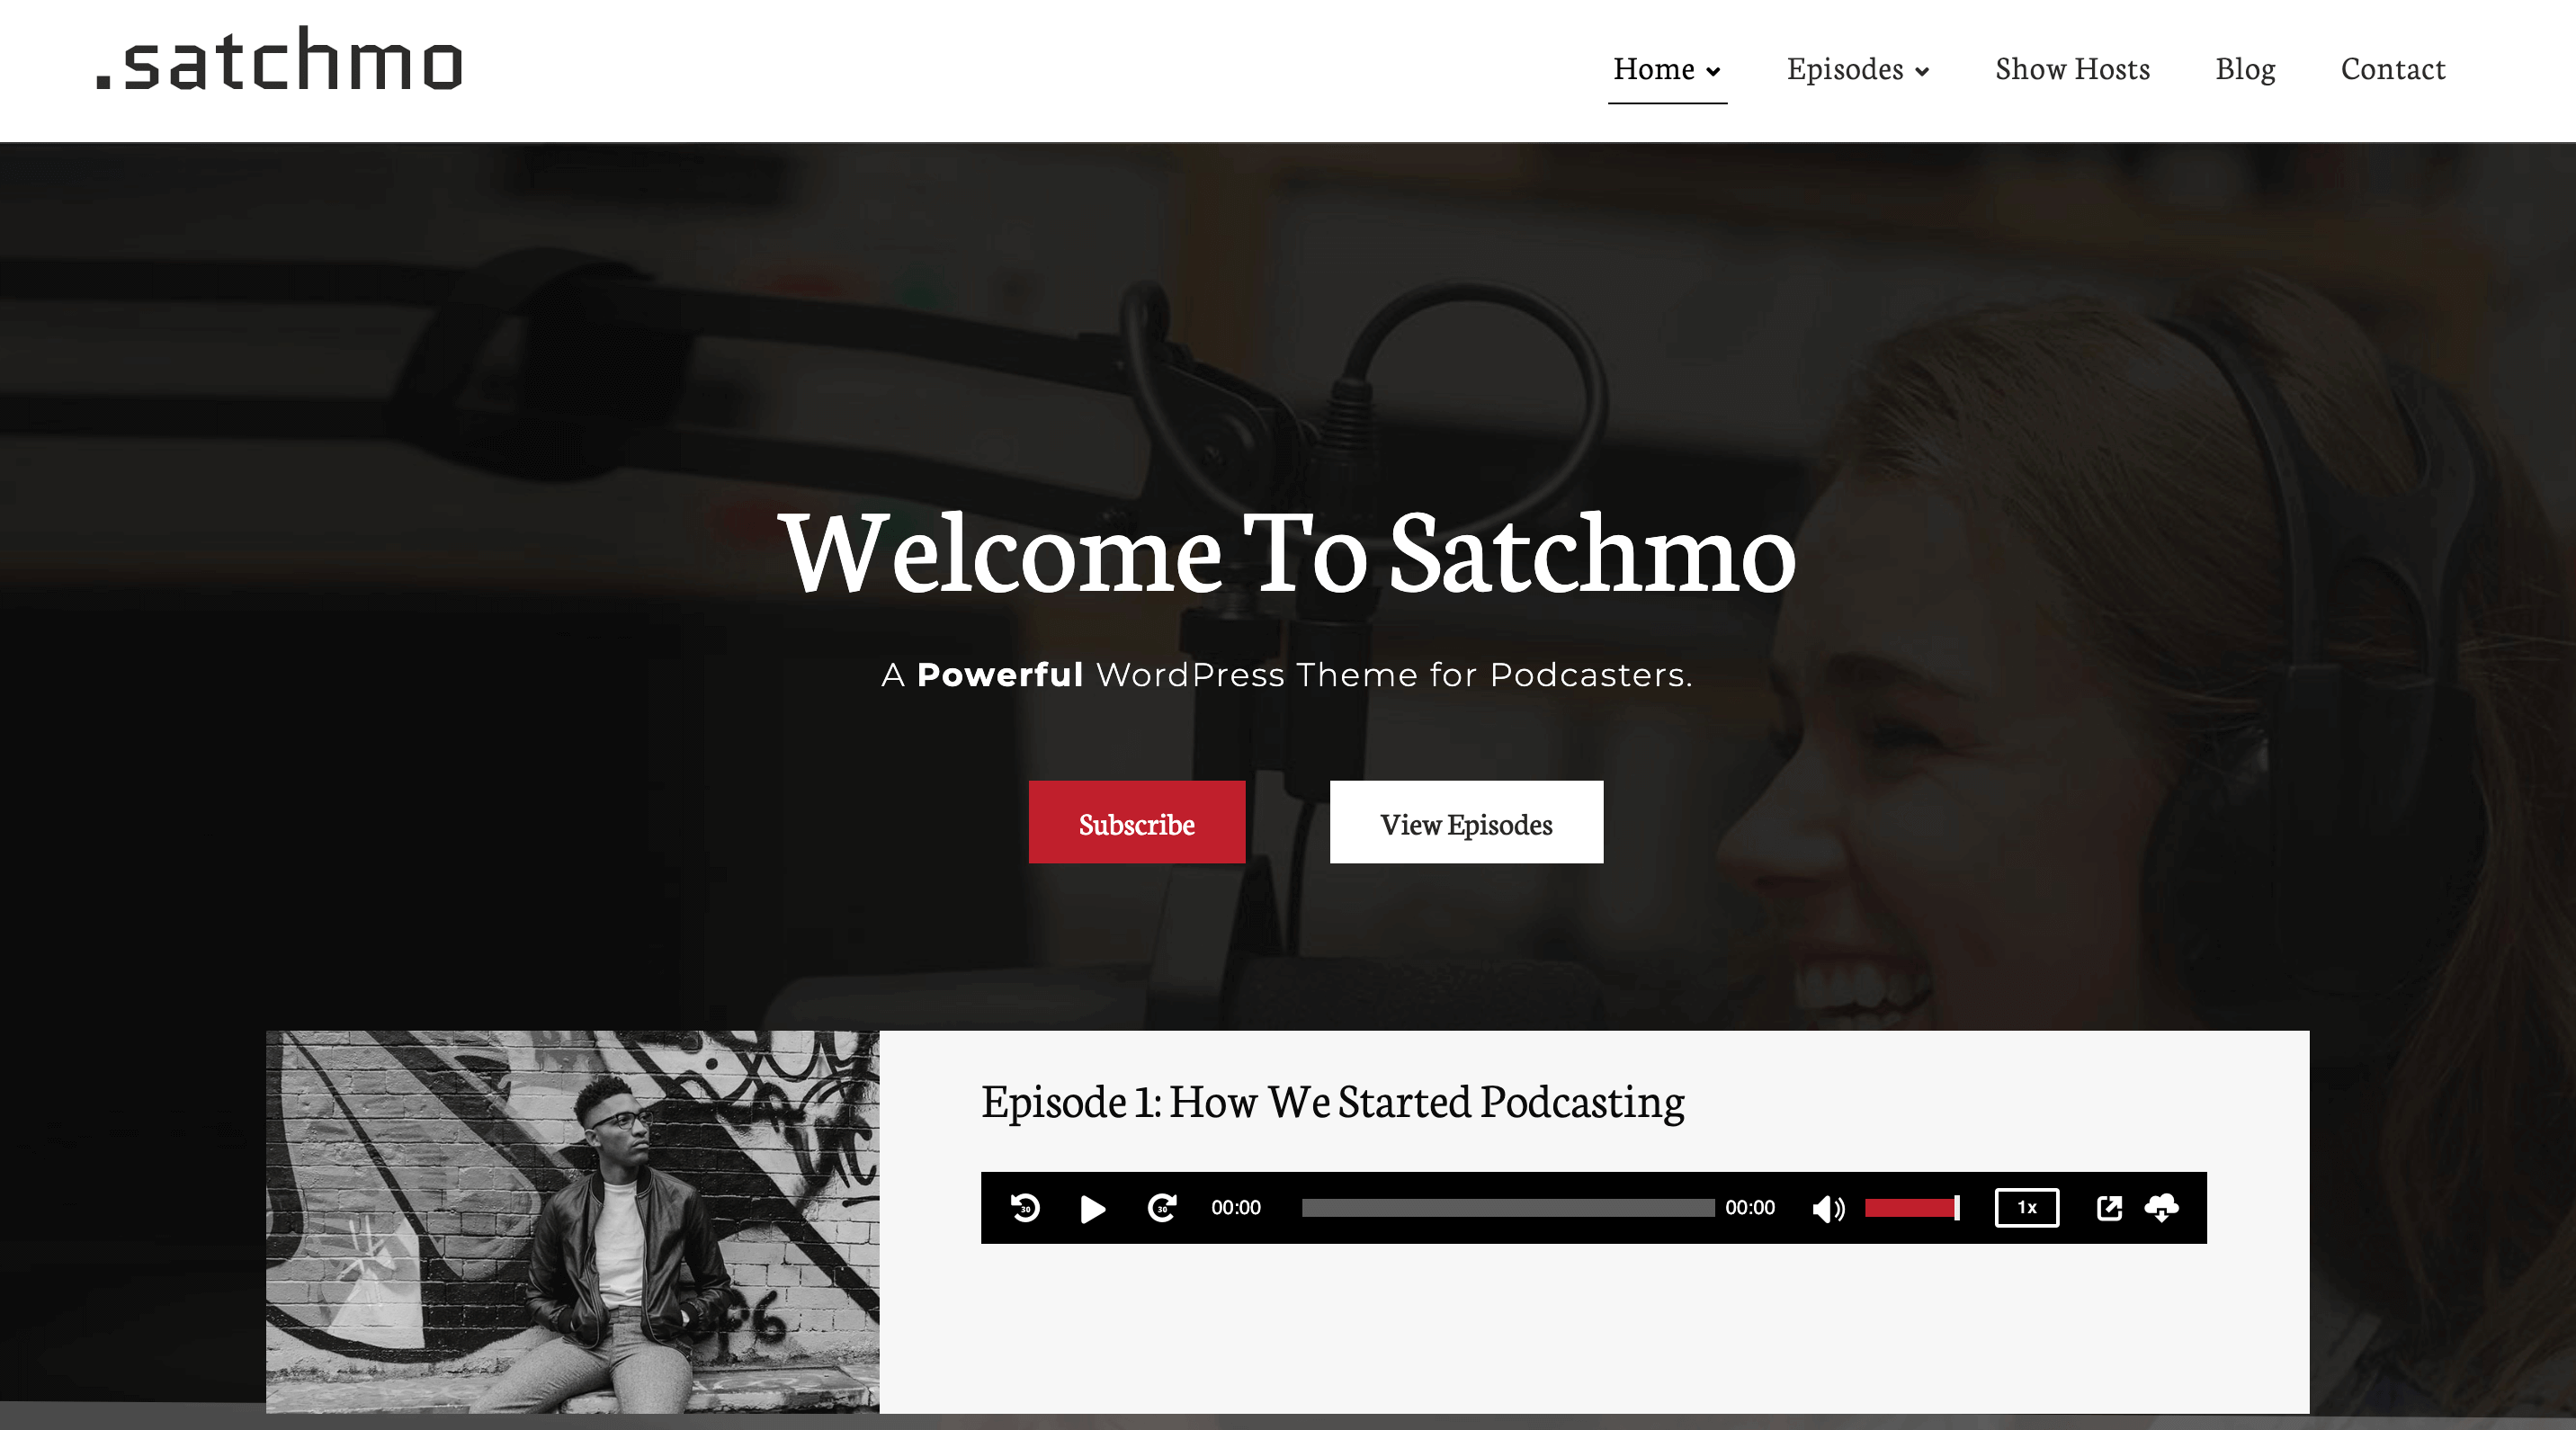 Satchmo ein WordPress Theme optimiert für Podcasts